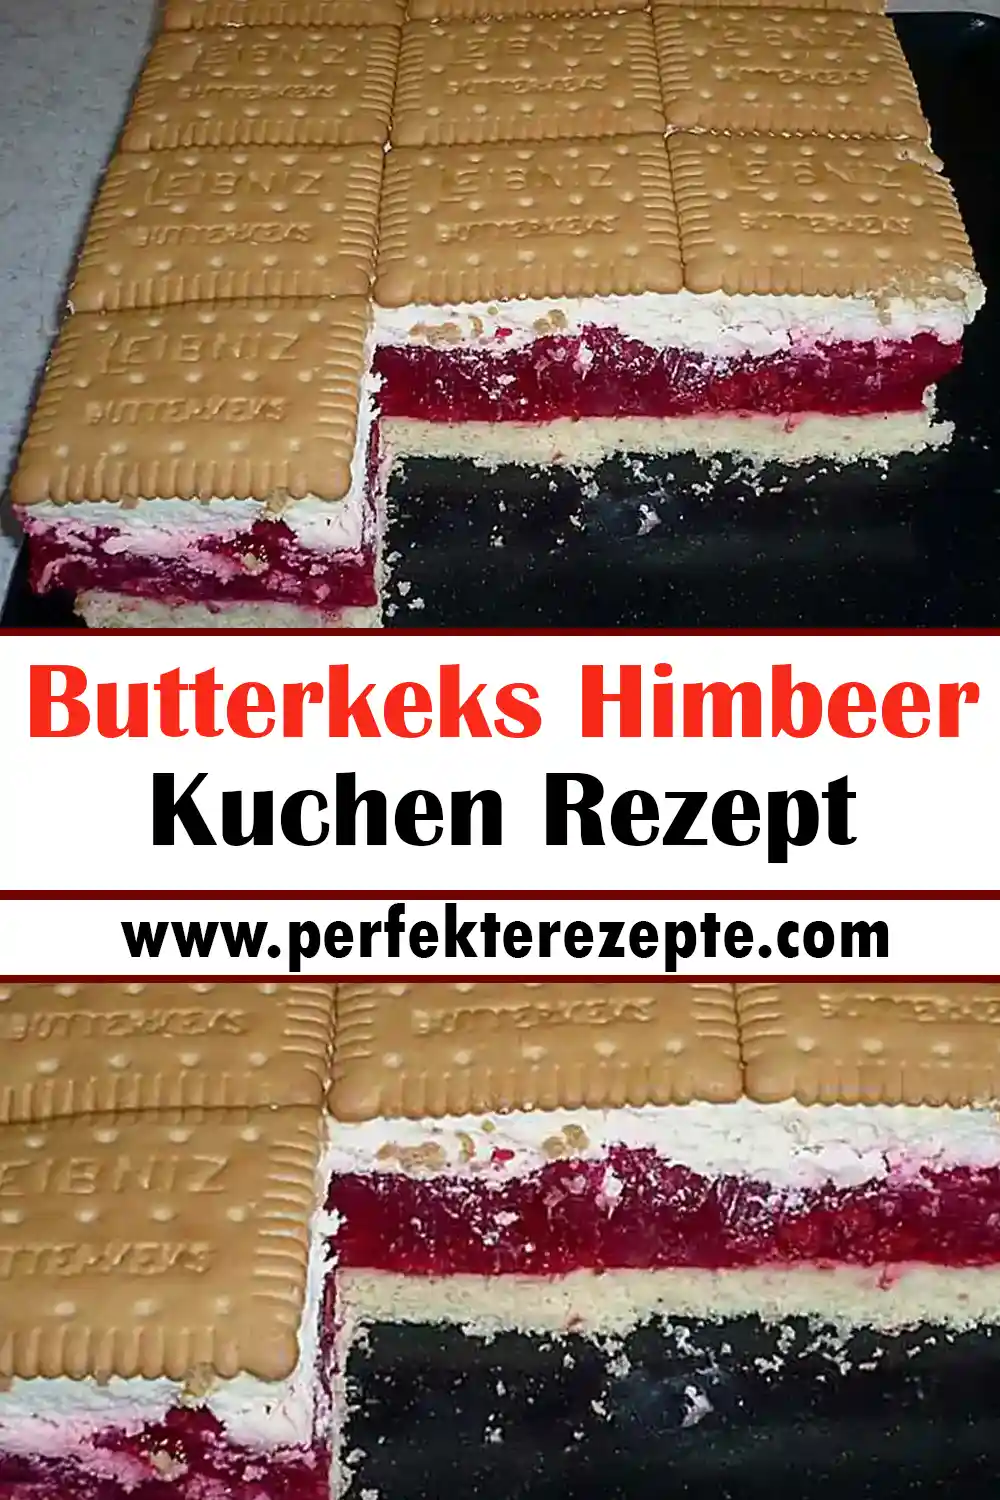 Butterkeks Himbeer Kuchen Rezept